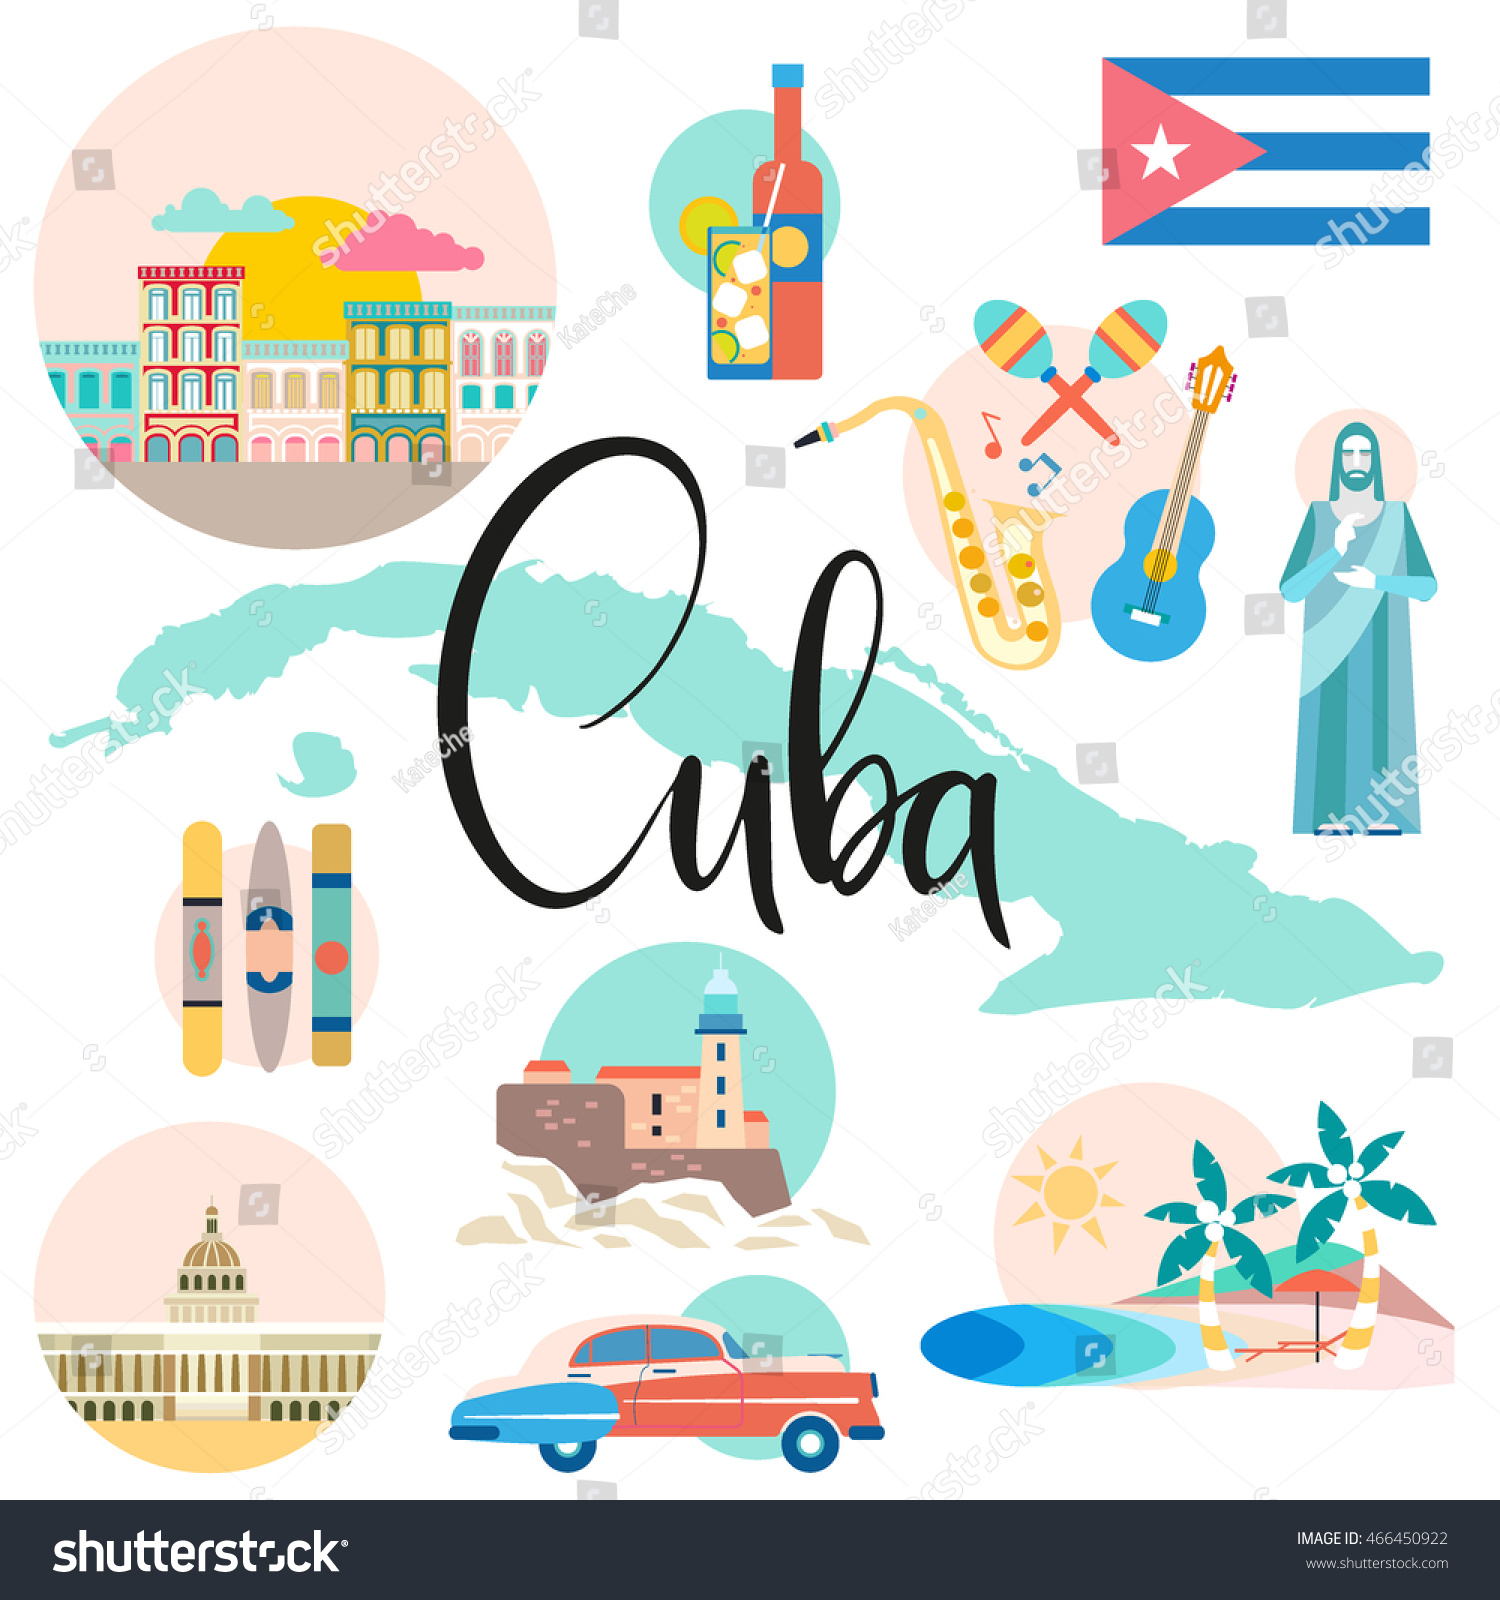 Cuba Attraction Sights Travel Stock Vector (Royalty 466450922